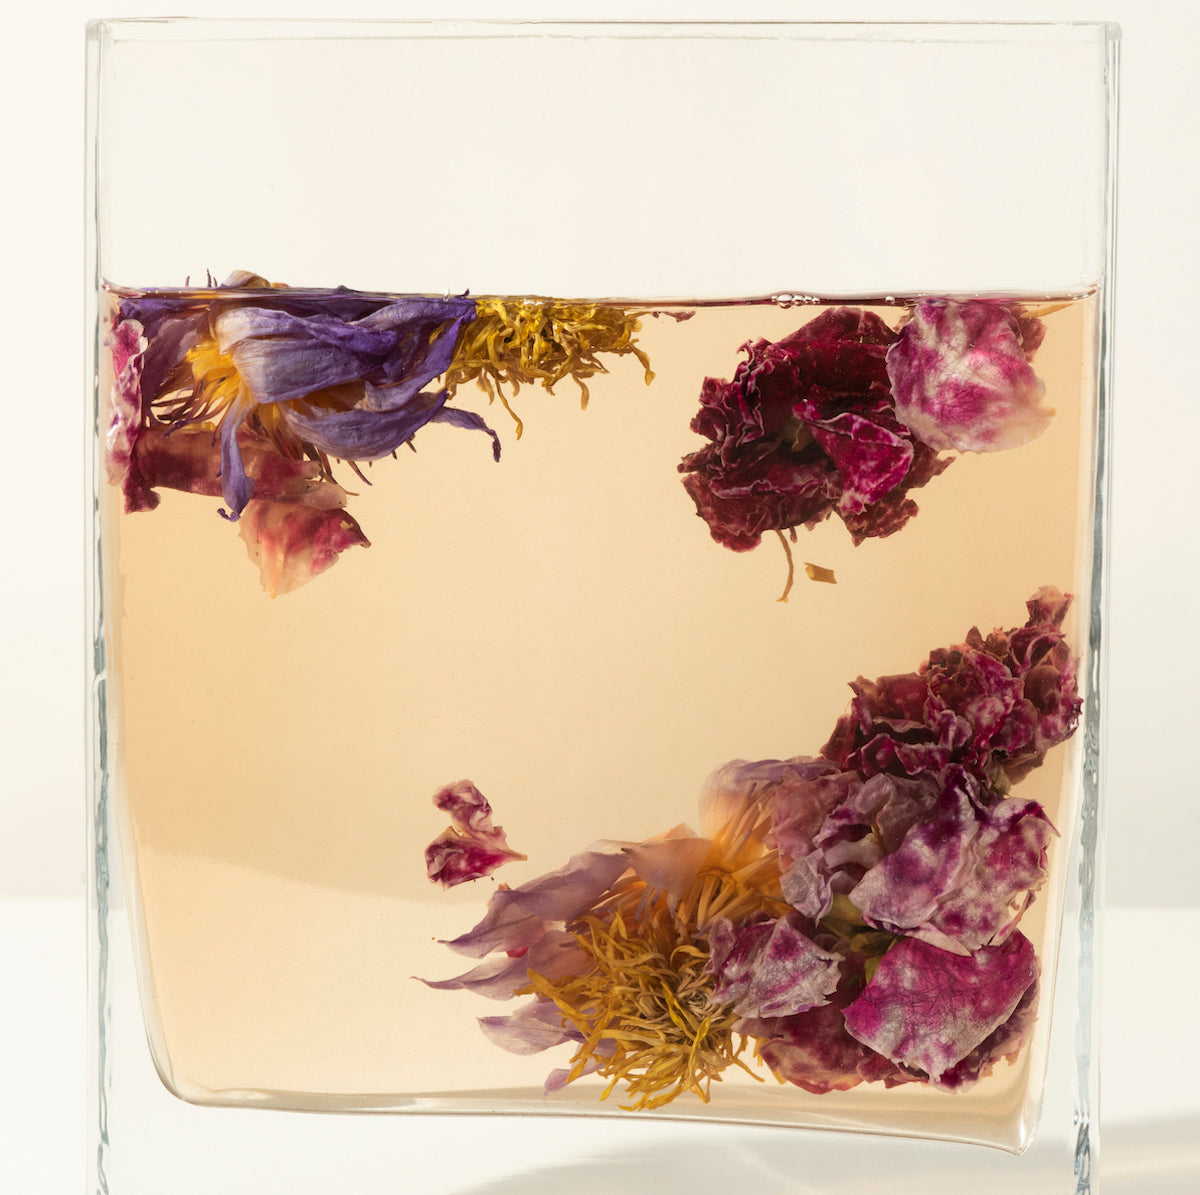 Whole Flower Tea - CRYSANTHEME